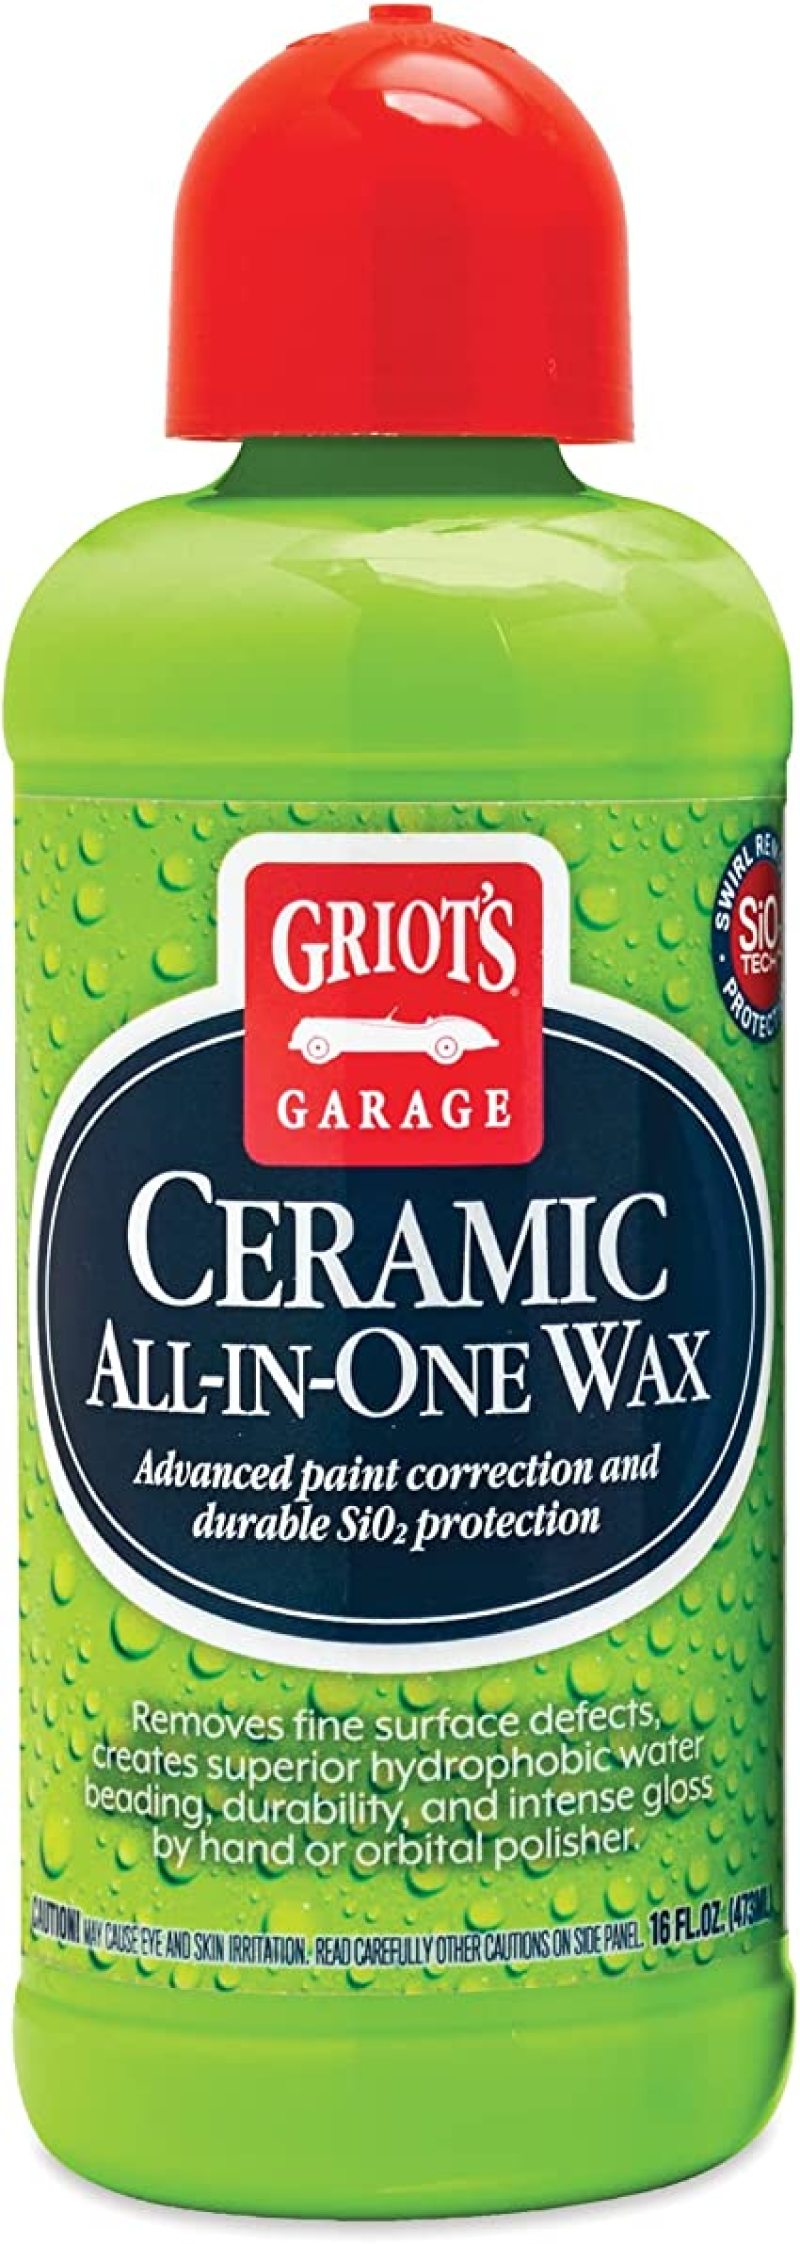 Griots Garage Ceramic All-in-One Wax - 16oz